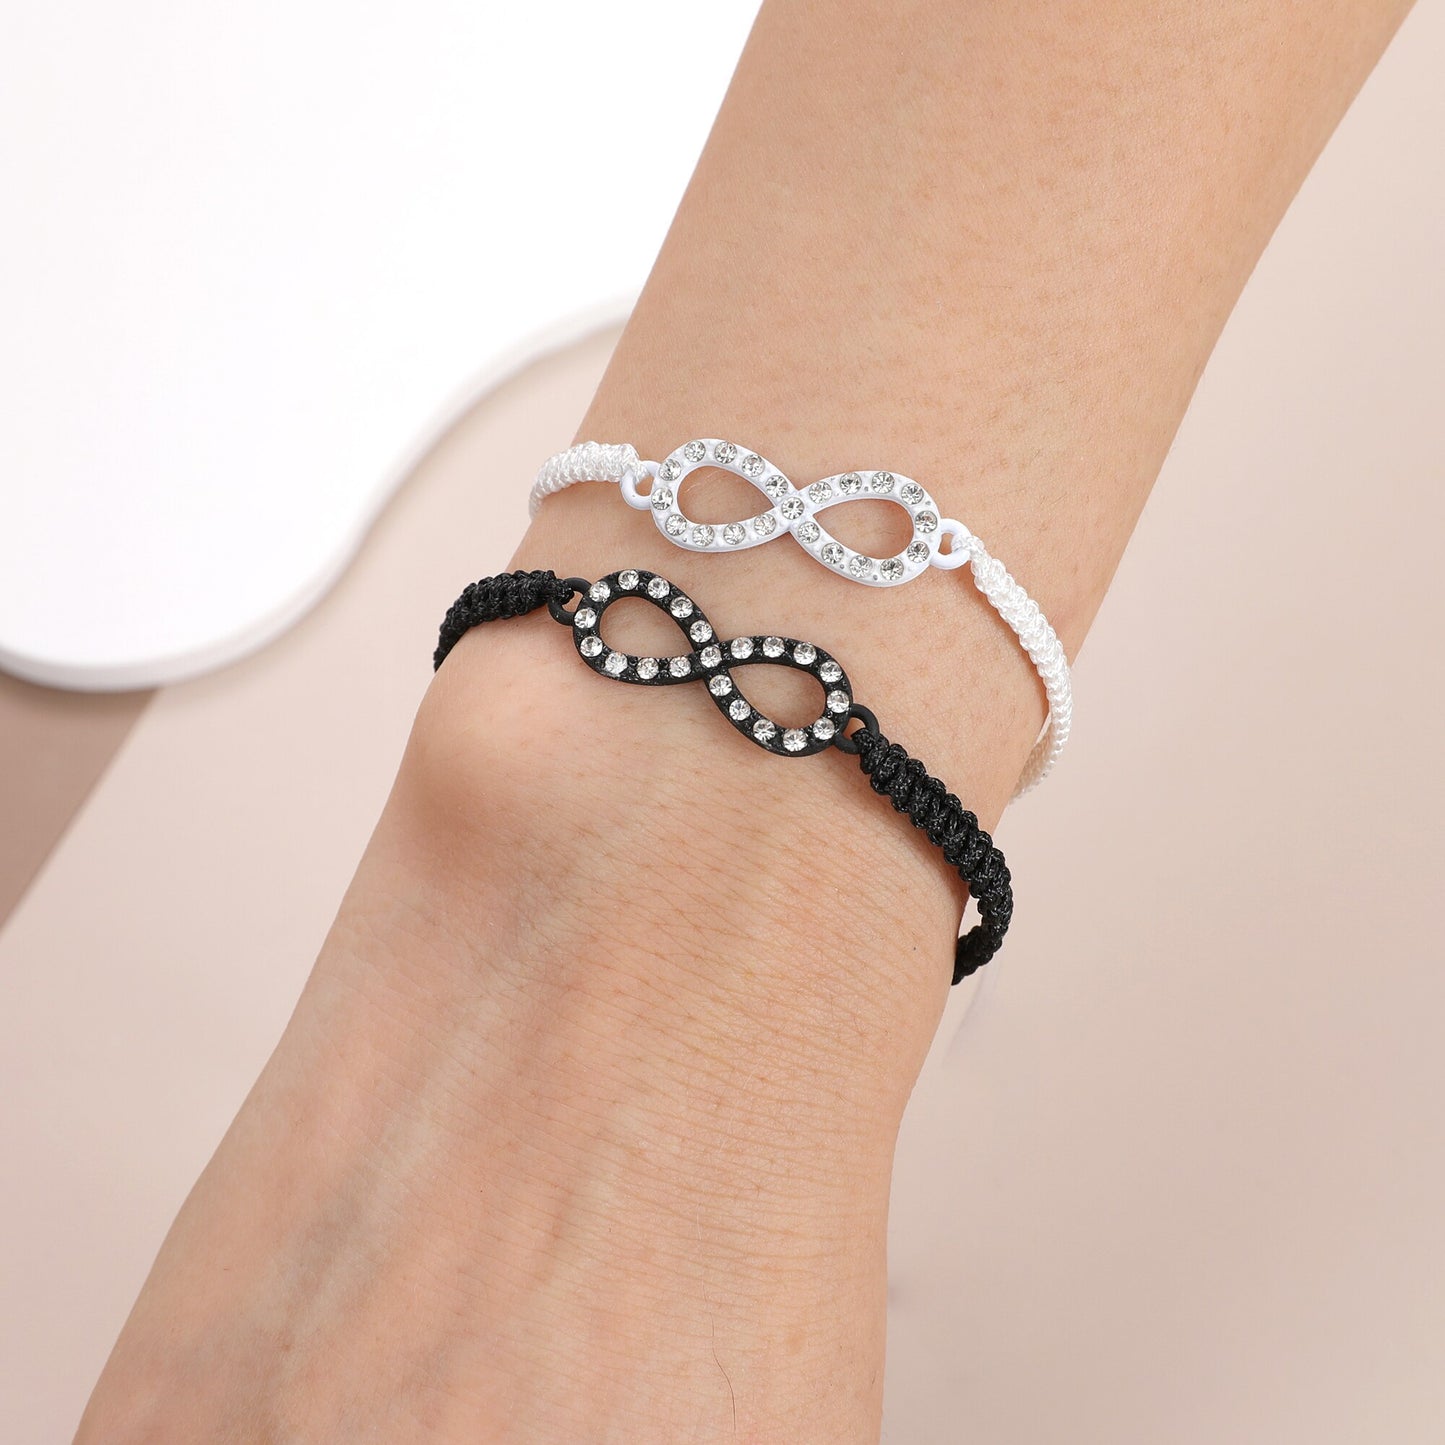 12pcs/set Together Forever Love Infinity Bracelet for Lovers White/black String Couple Bracelets Women Men's Wish Jewelry Gift